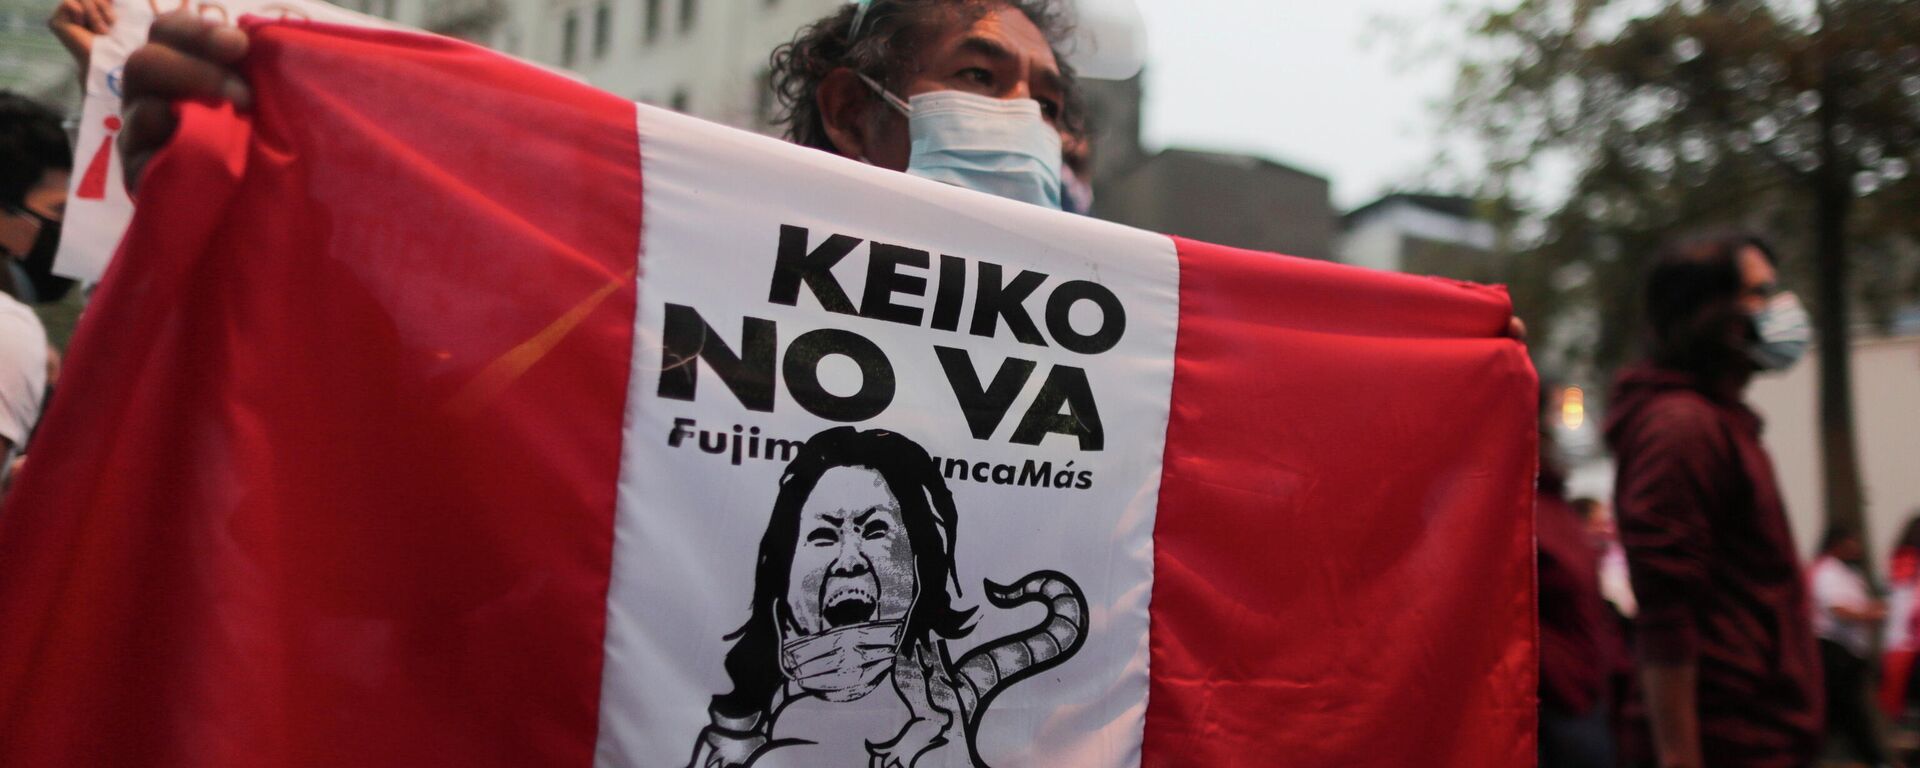 Marcha contra candidatura de Keiko Fujimori (Archivo) - Sputnik Mundo, 1920, 31.05.2021